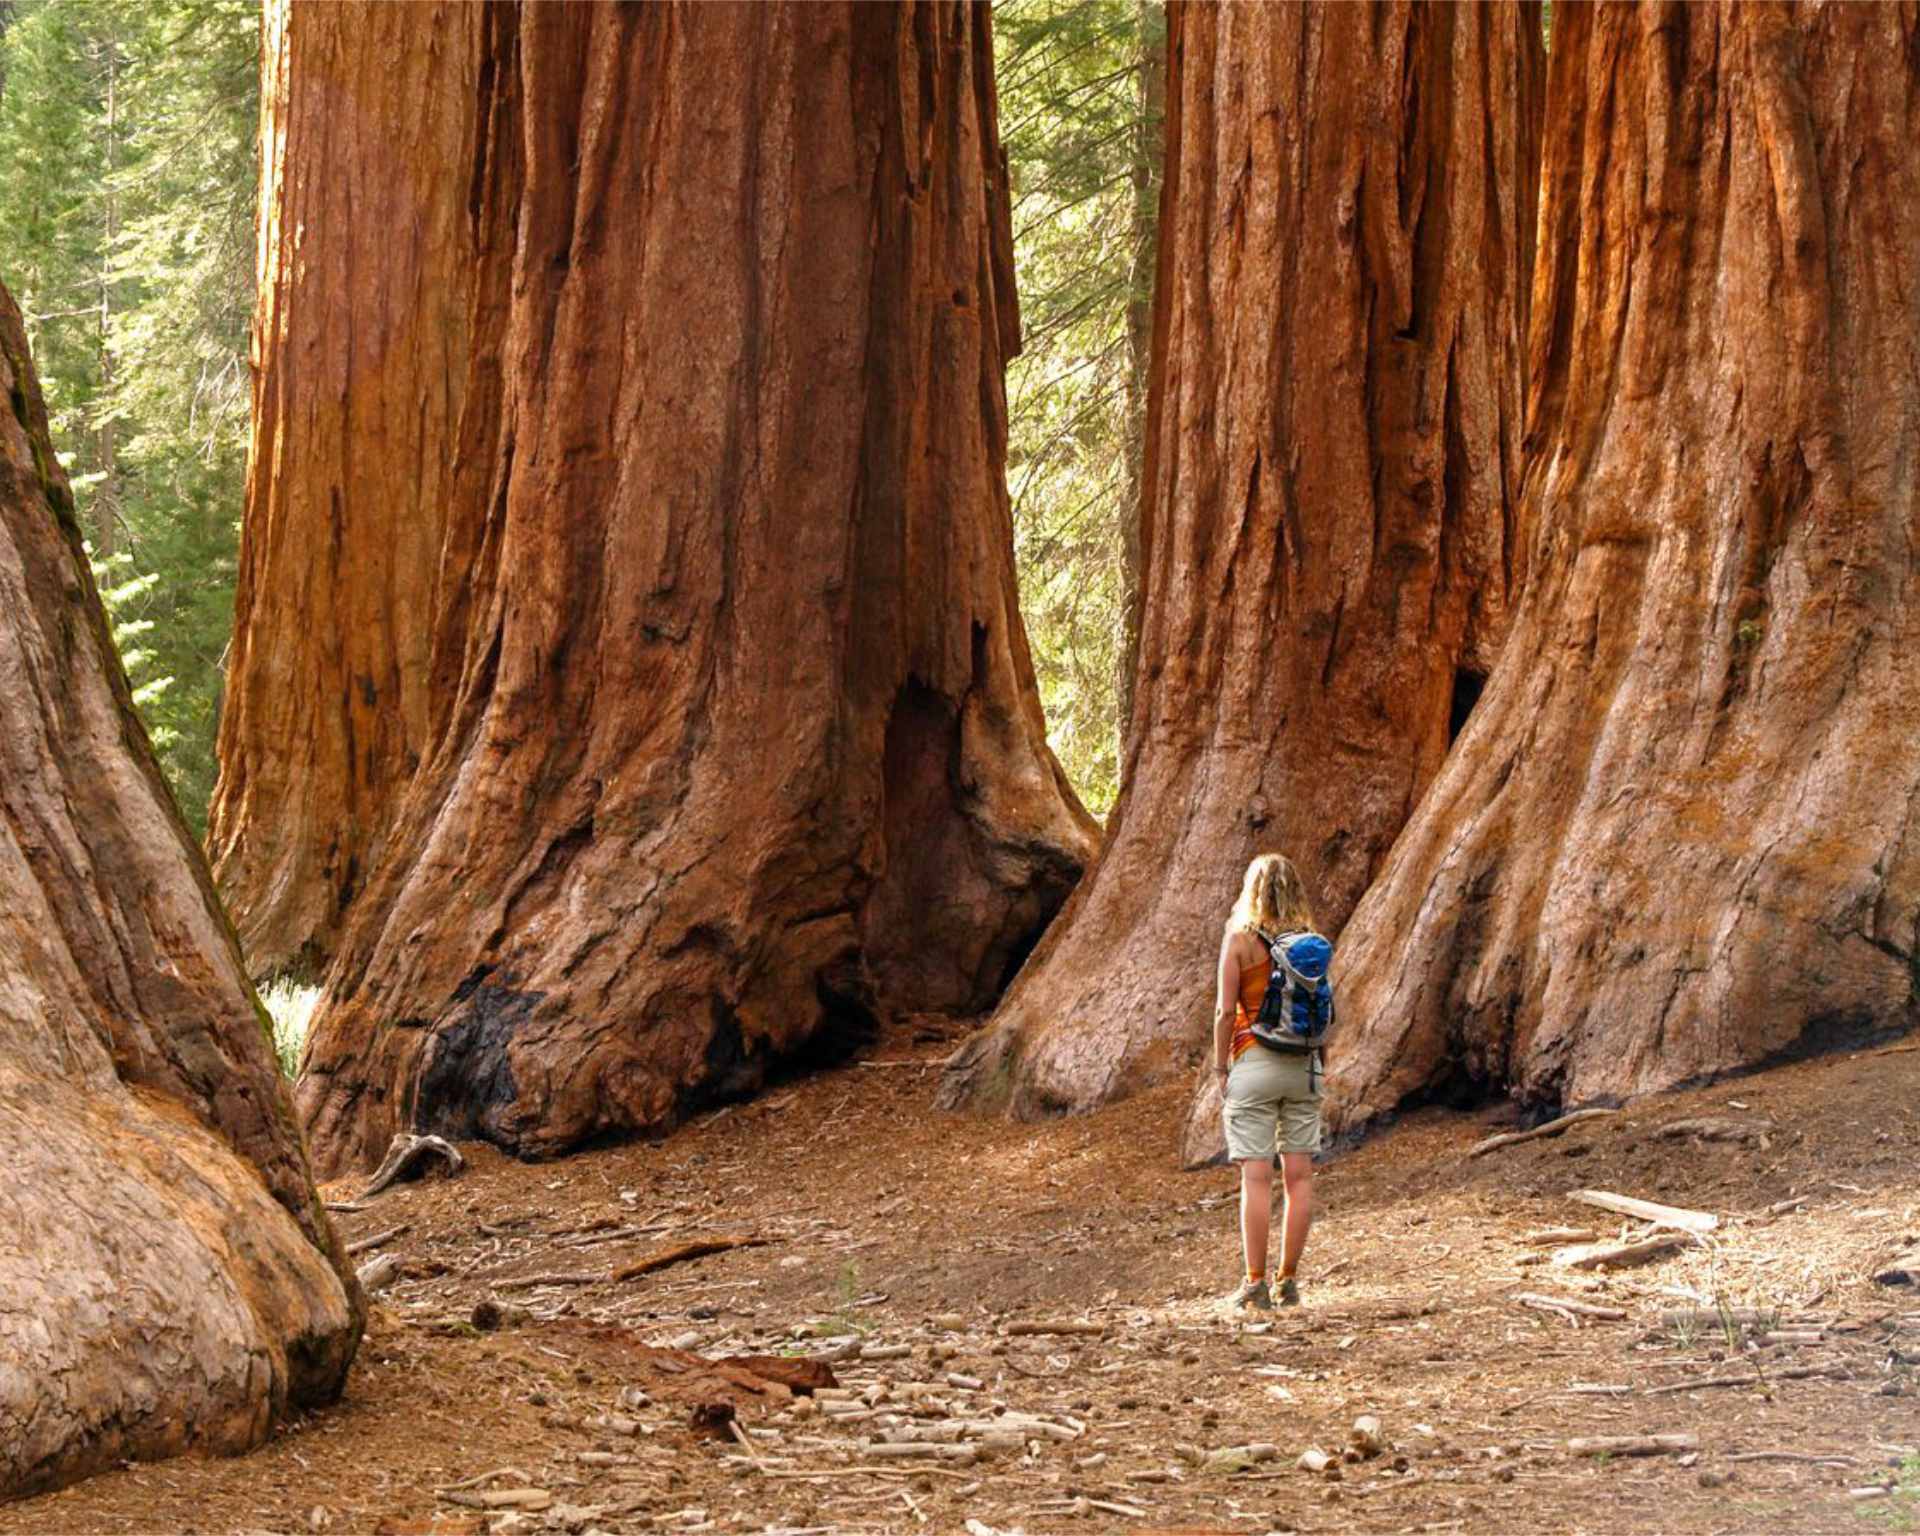 Giant sequoias at Yosemite National Park.